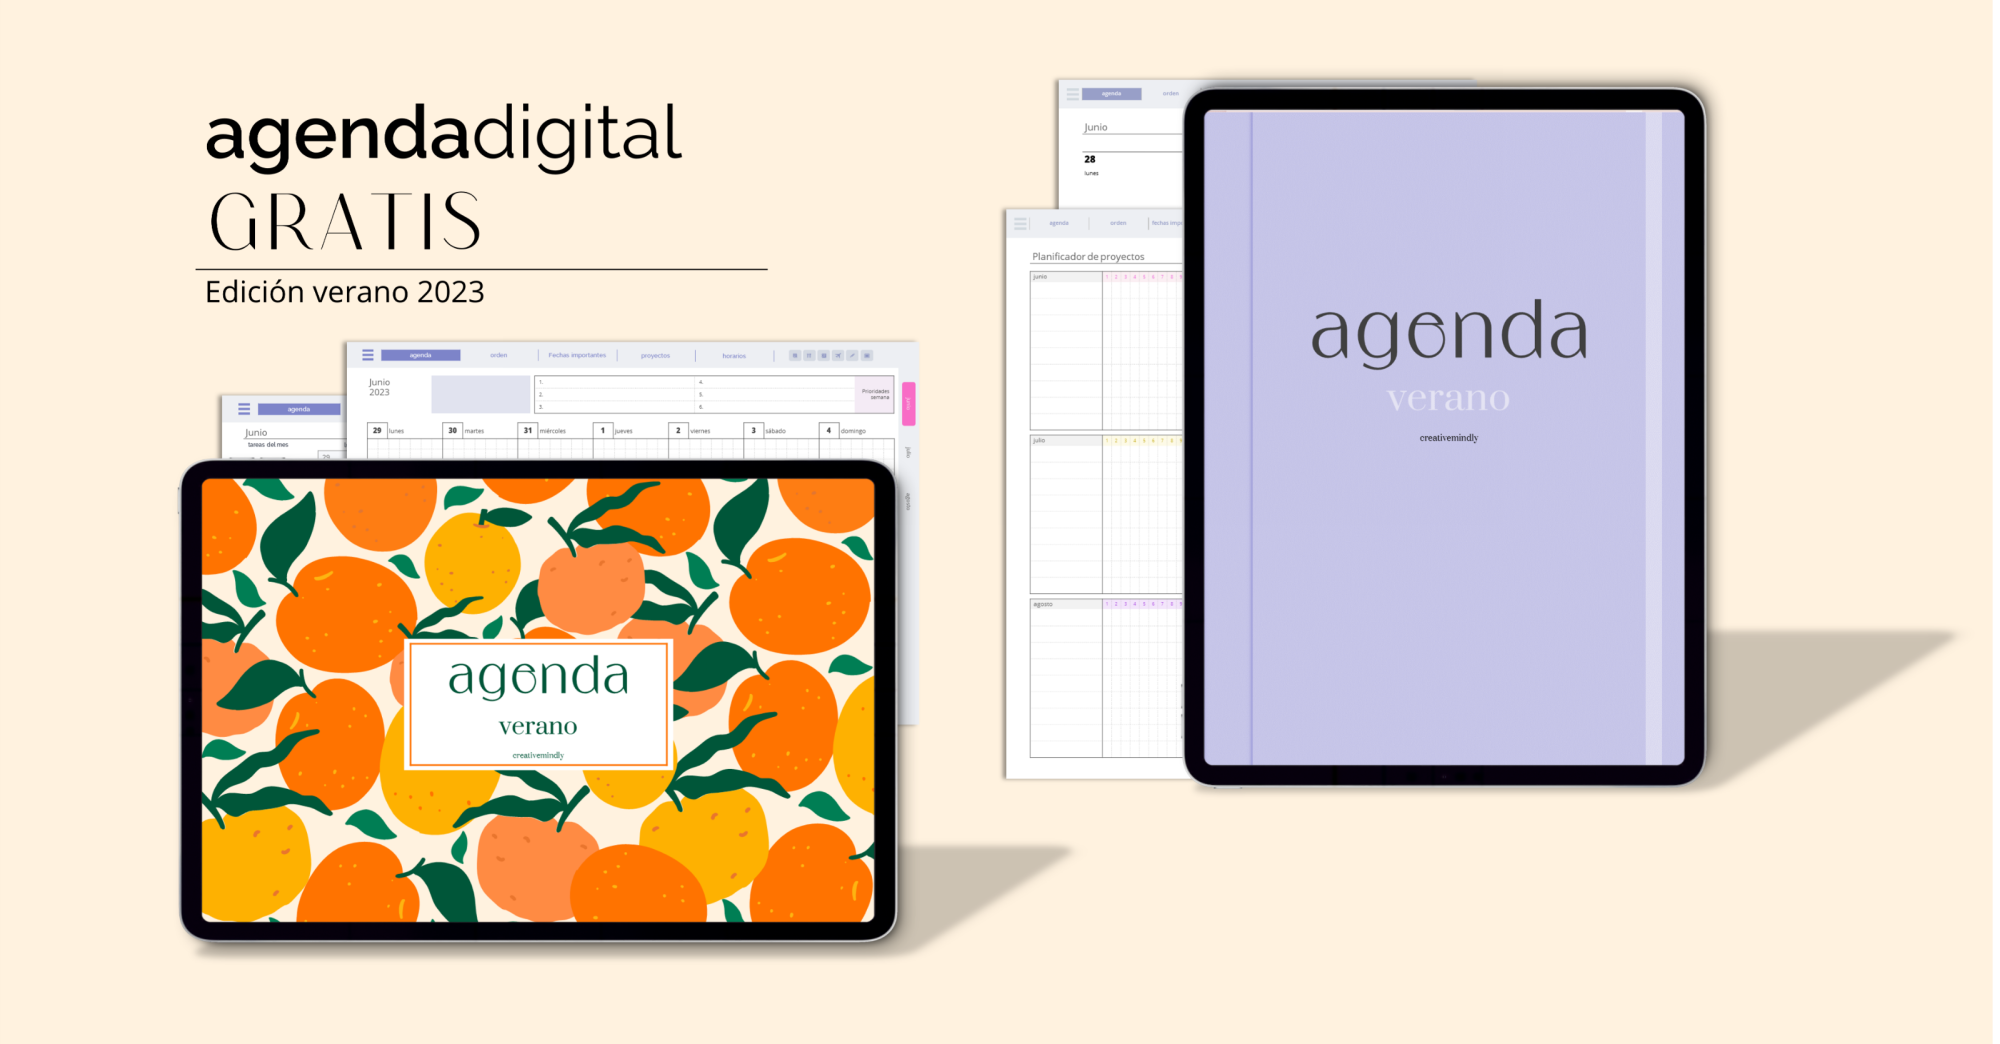 agenda digital gratis ipad